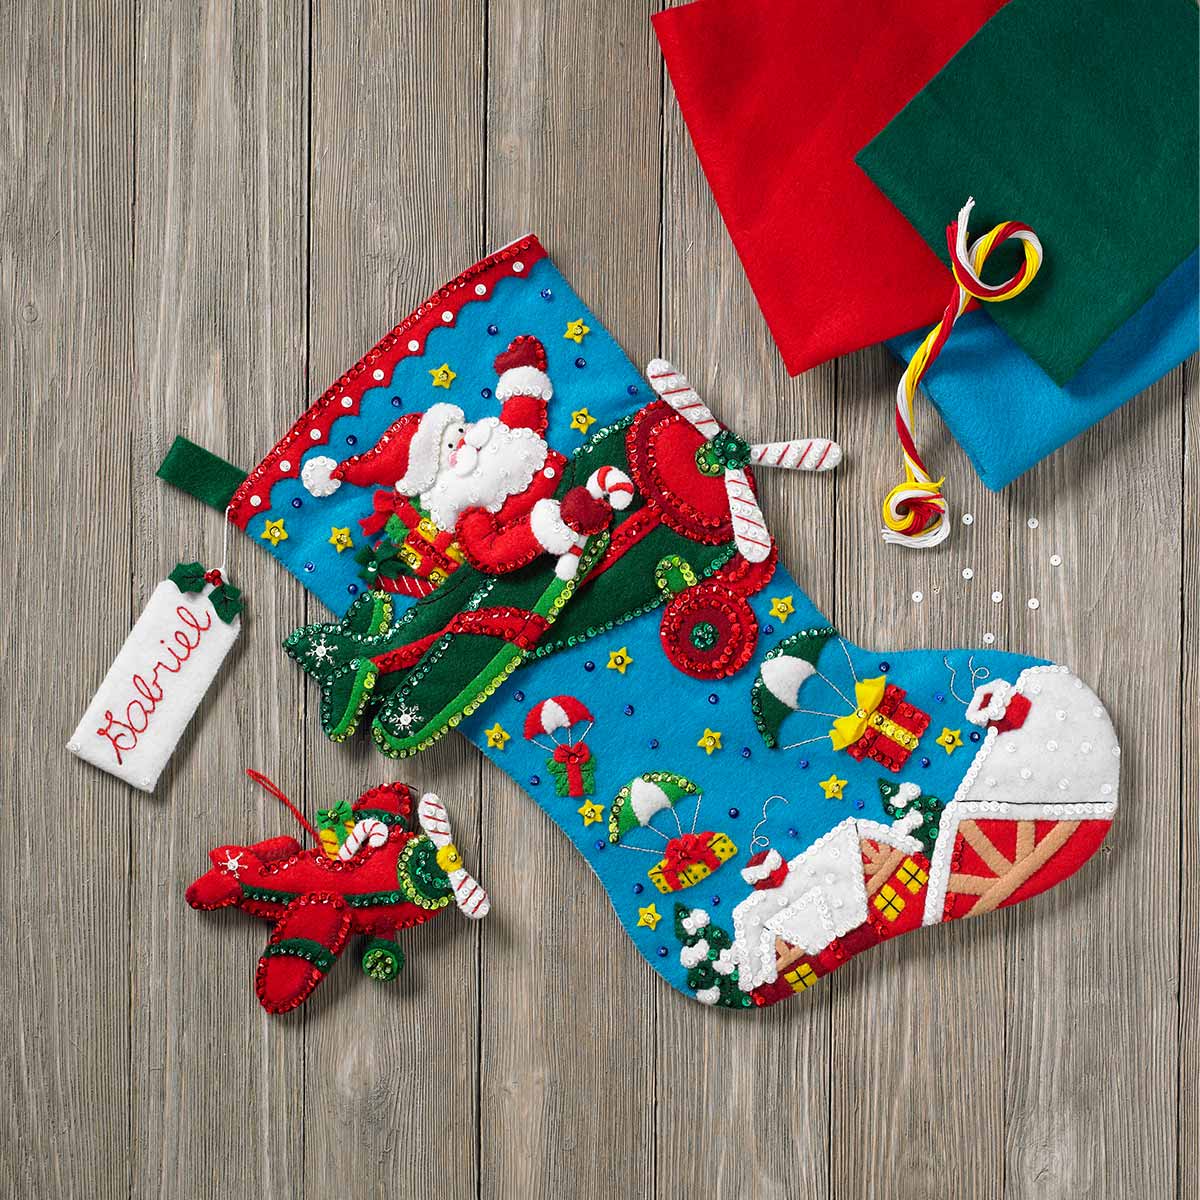 Airplane Christmas Stocking Best Seller -   Christmas stockings diy,  Christmas stockings, Felt christmas stockings